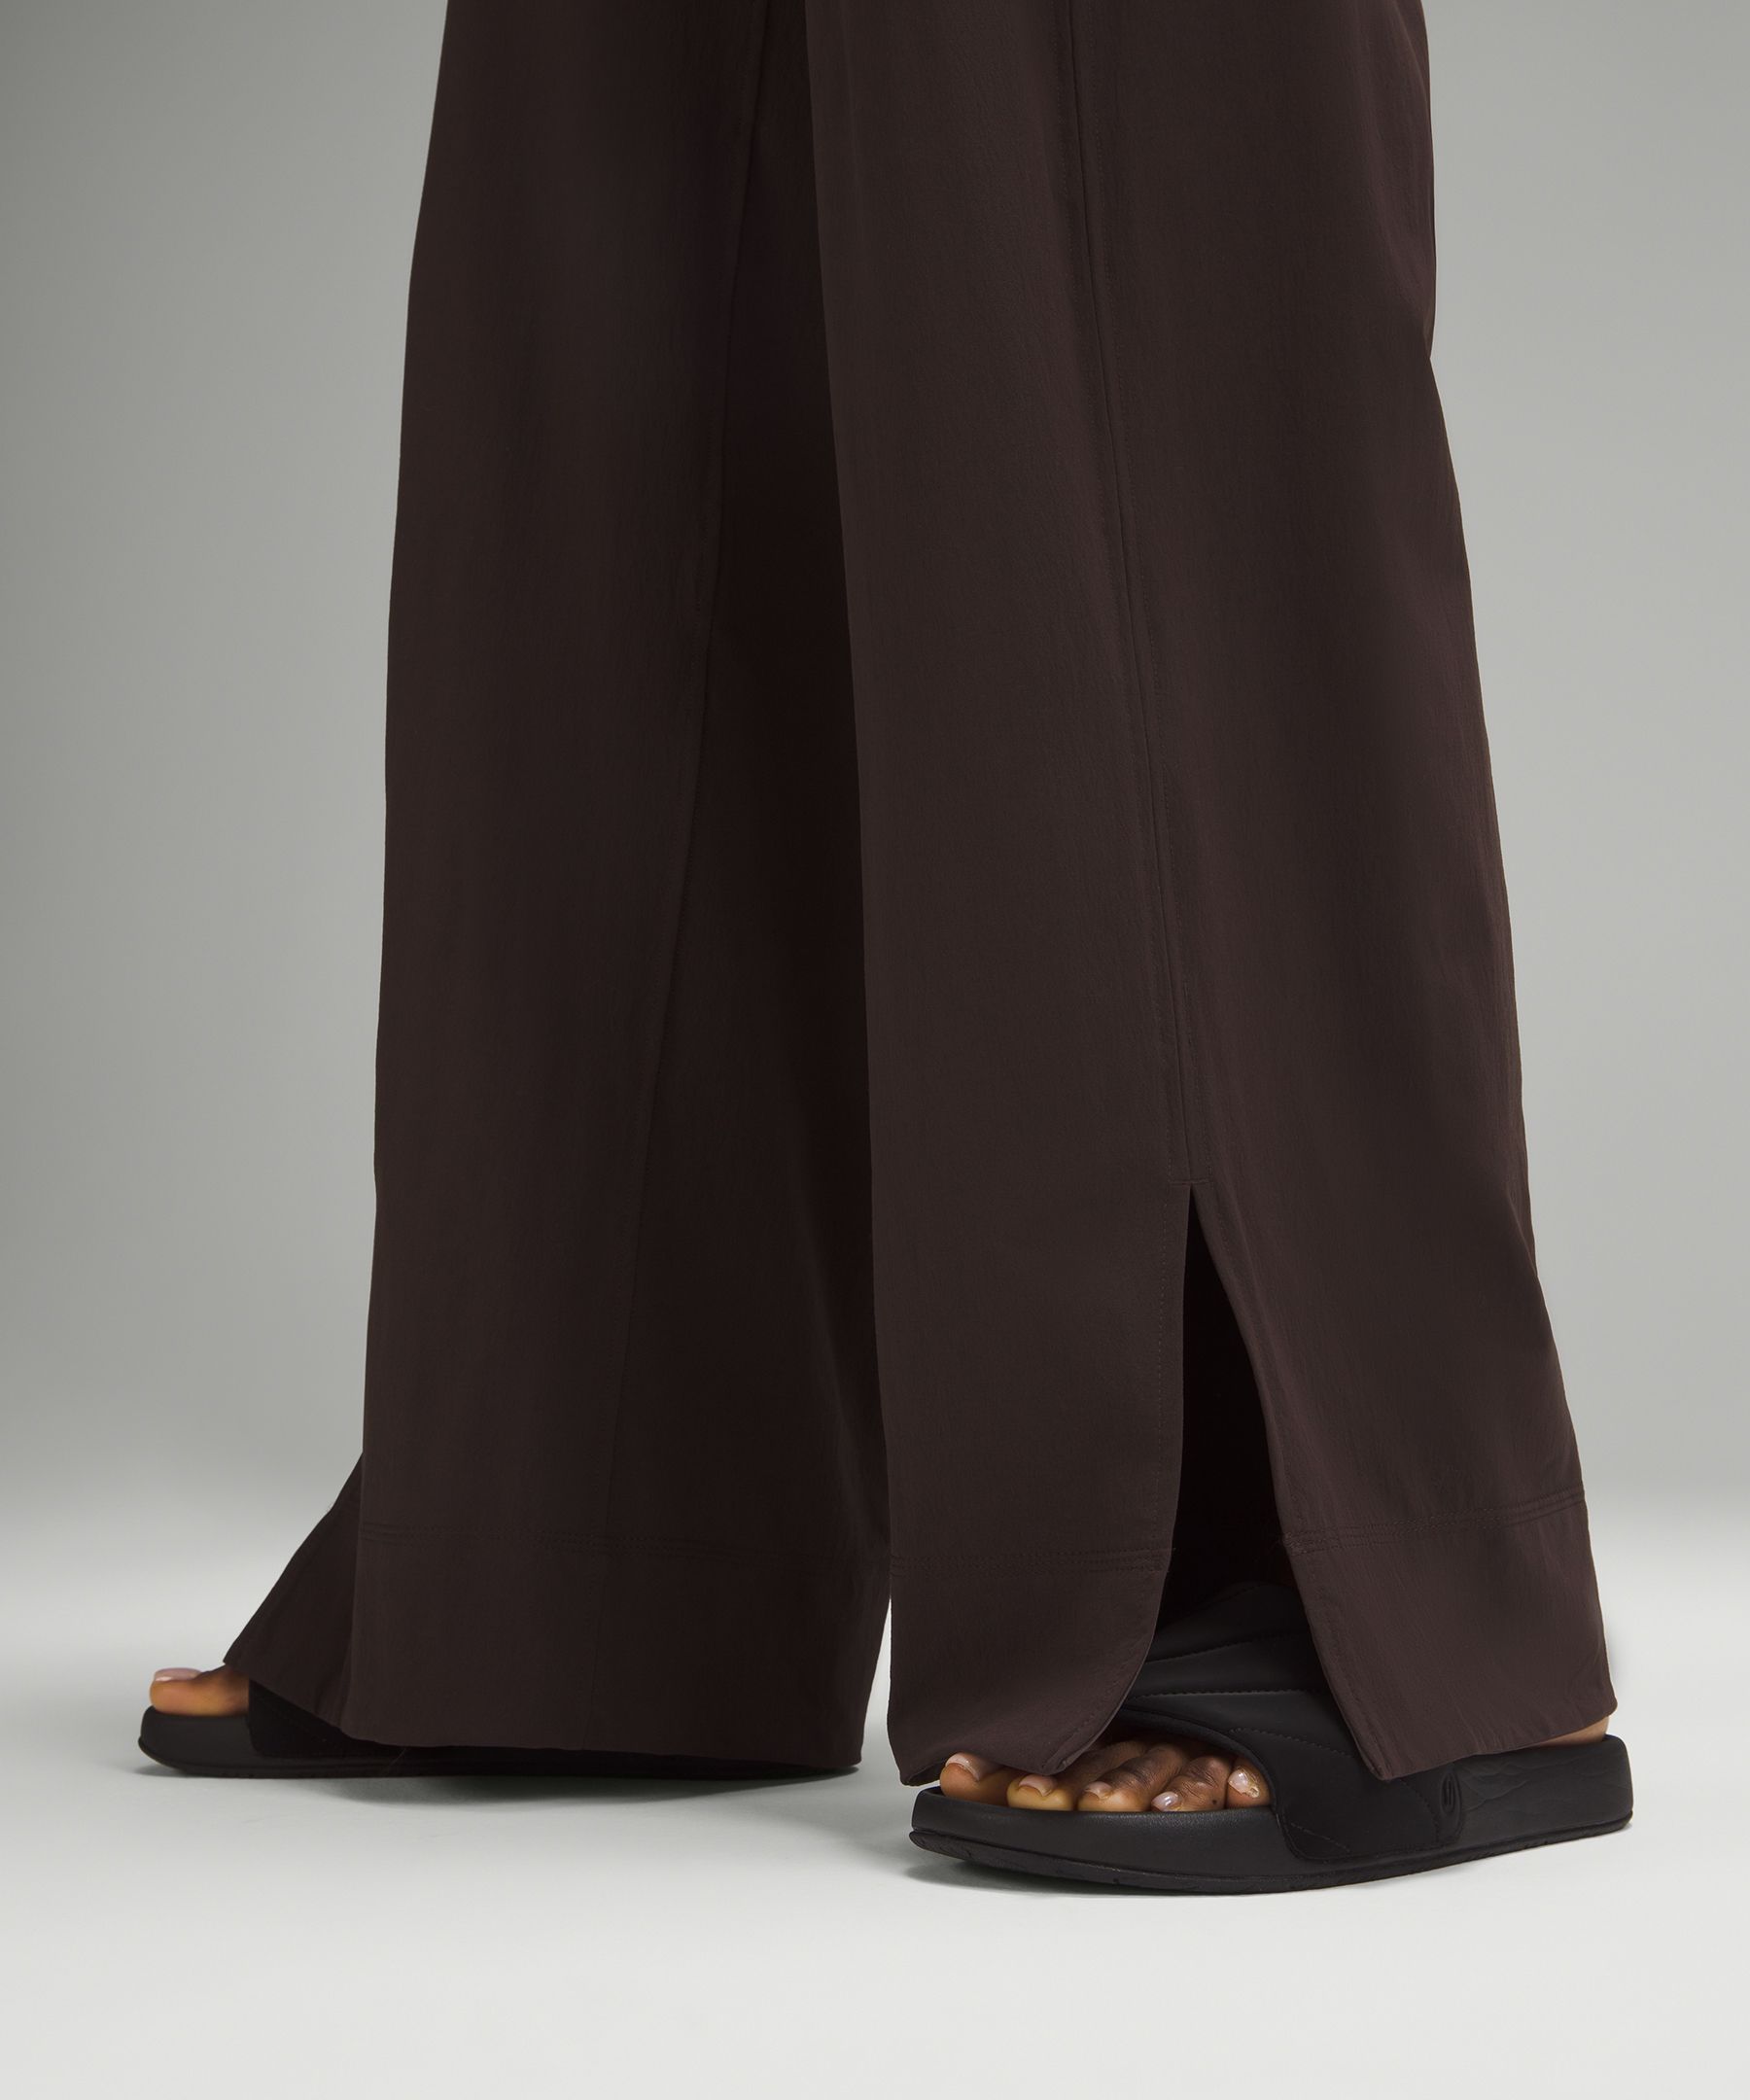 Lululemon Noir Pant high-rise, wide-leg pants